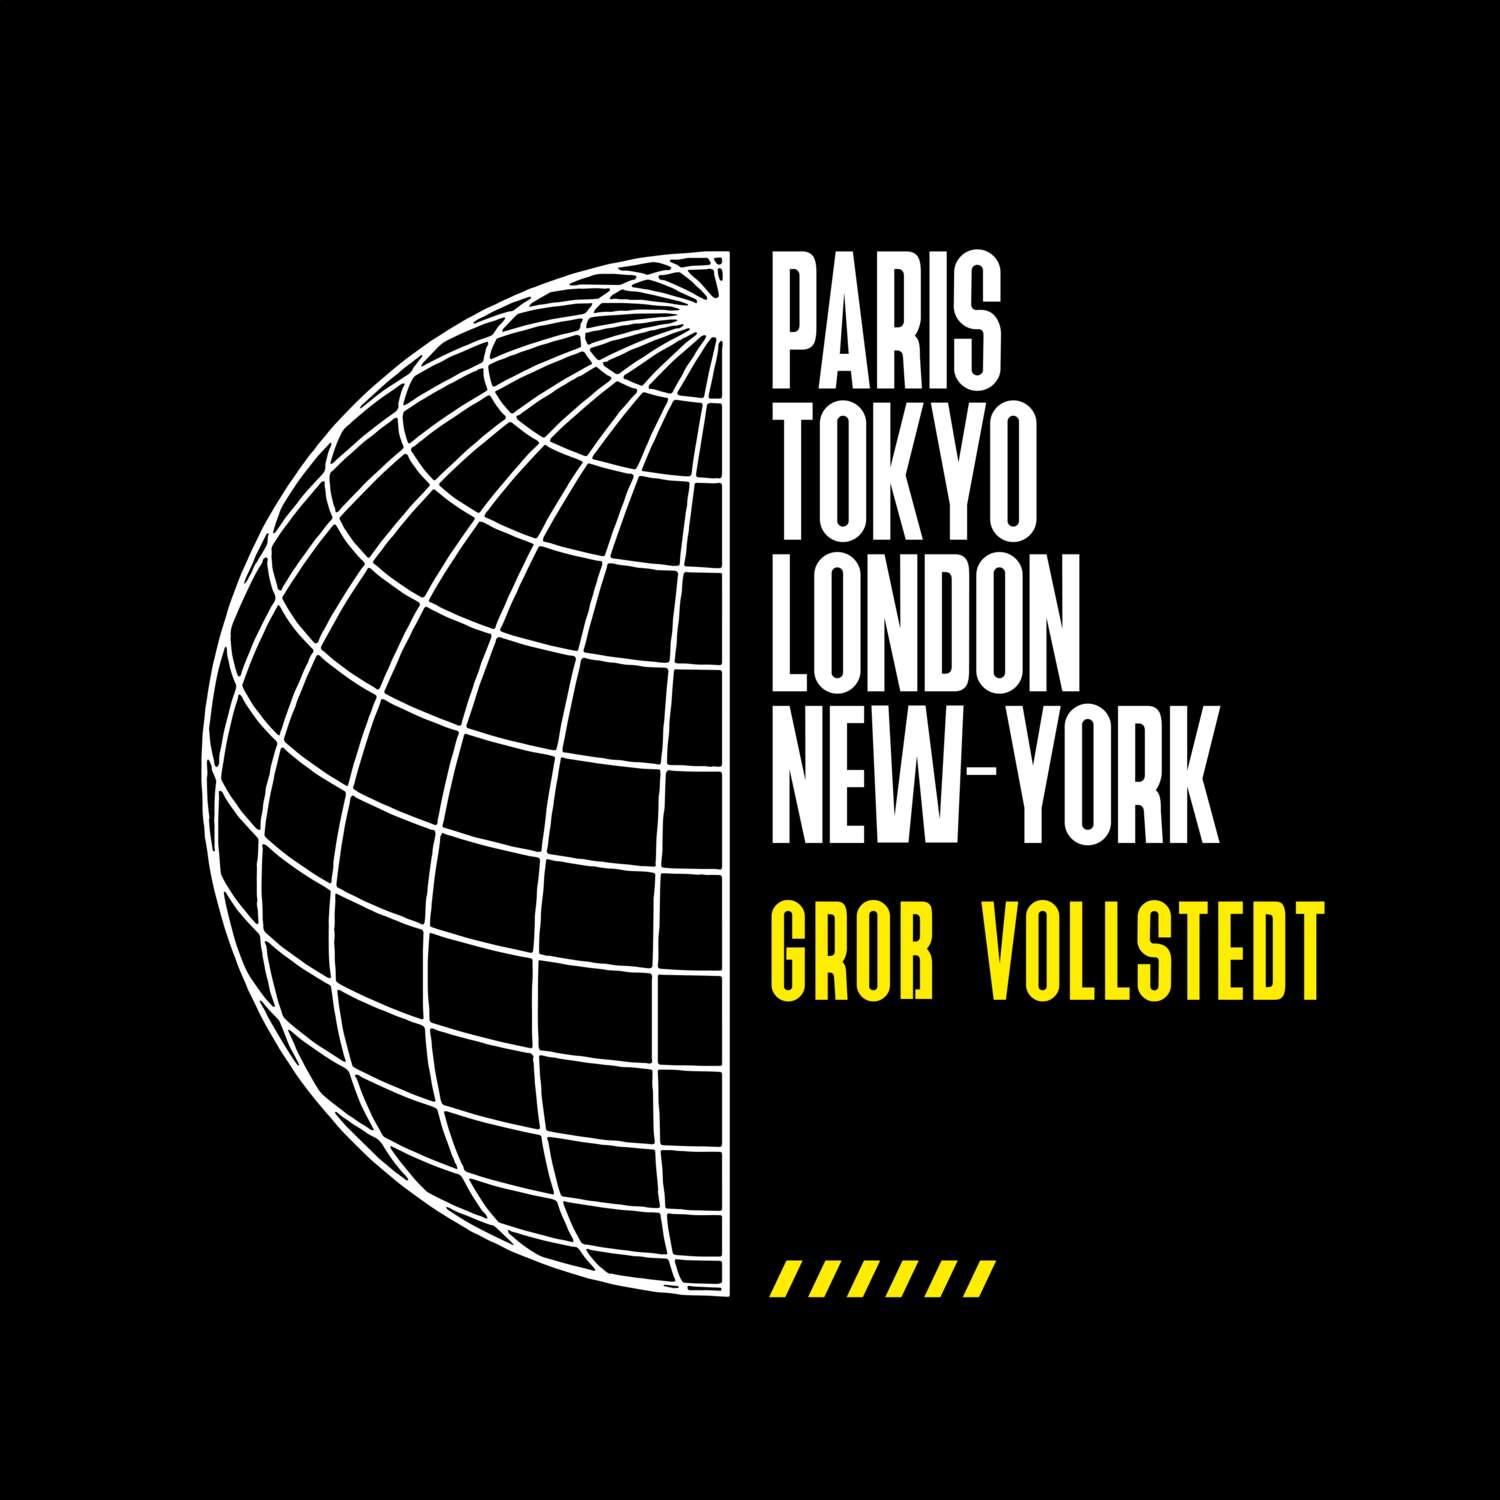 Groß Vollstedt T-Shirt »Paris Tokyo London«